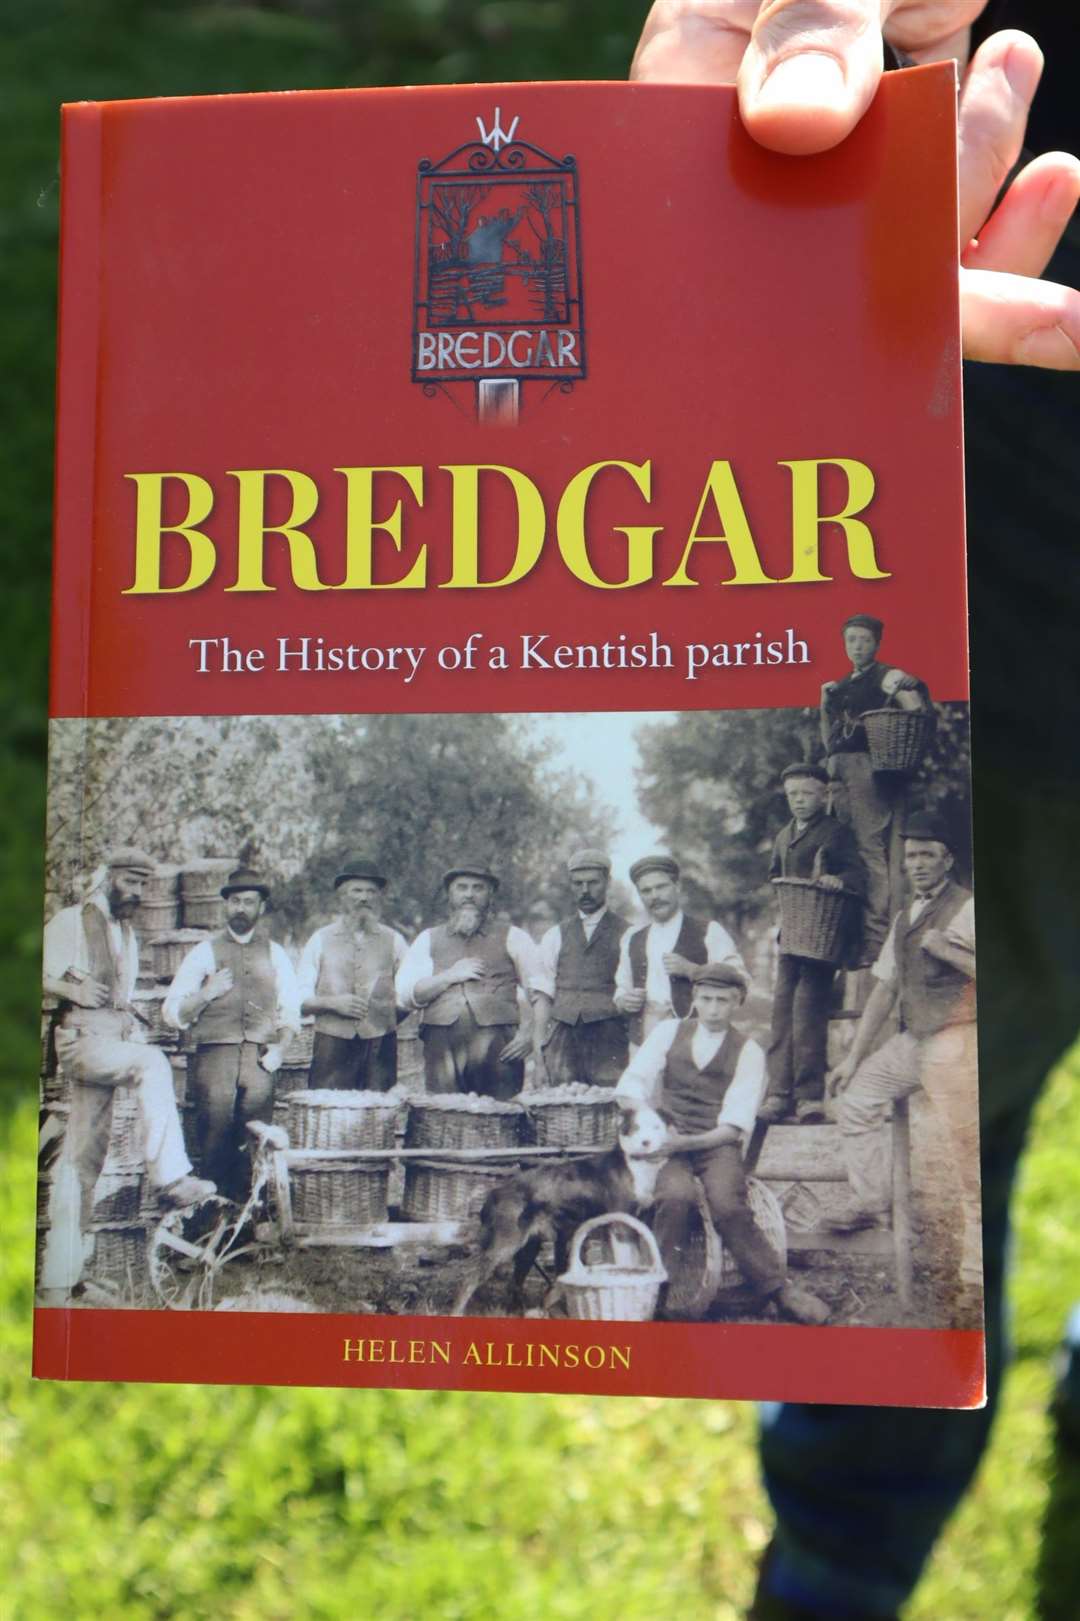 Bredgar - a history of a Kentish parish by Helen Allinson